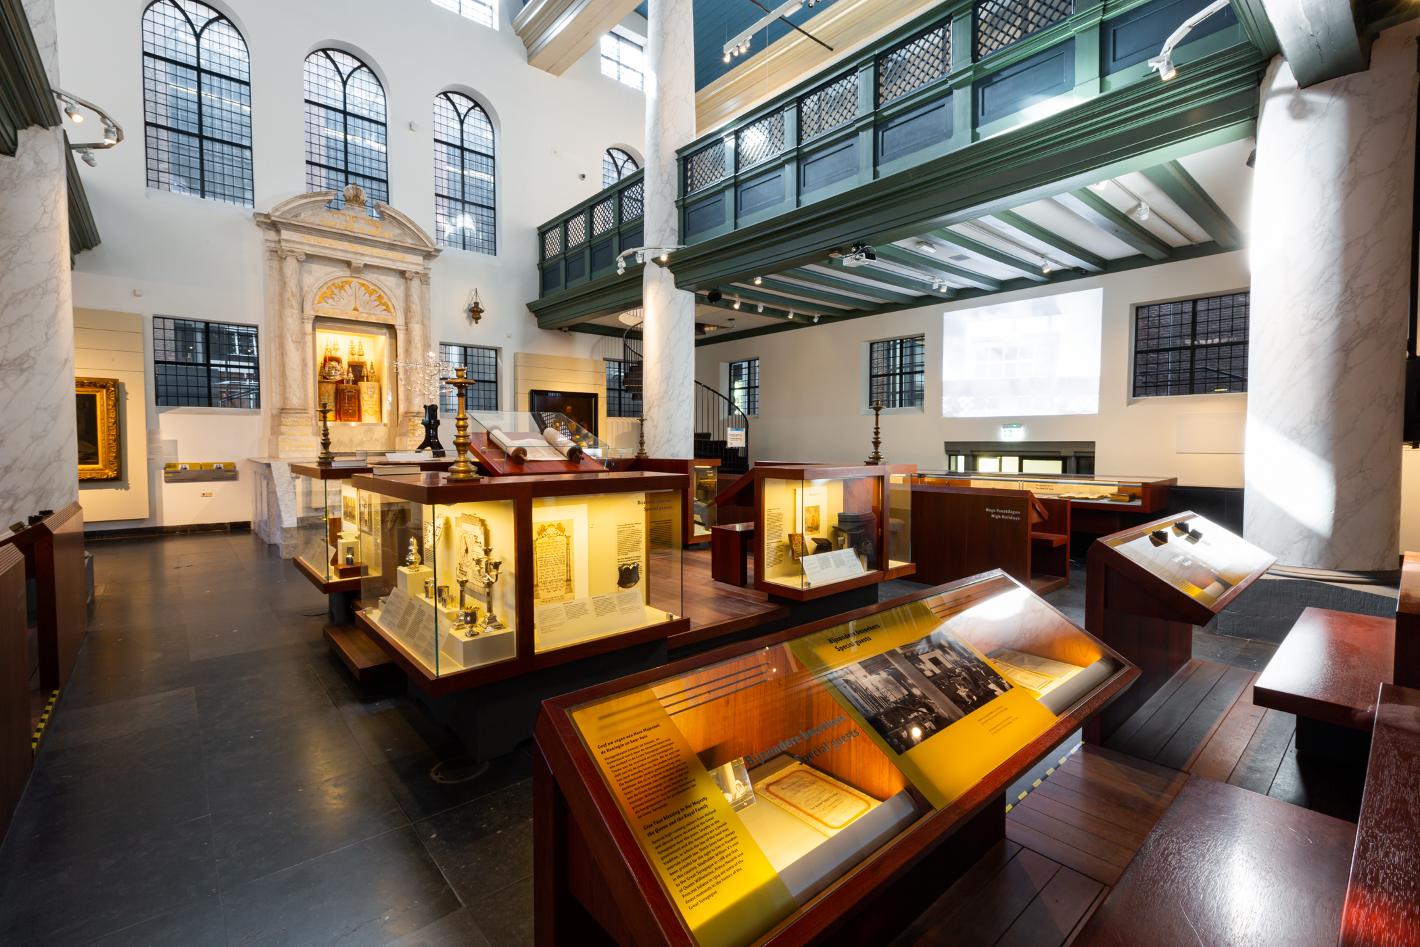 Photo Joods Cultureel Kwartier in Amsterdam, View, Visit museum, Sightseeing - #2